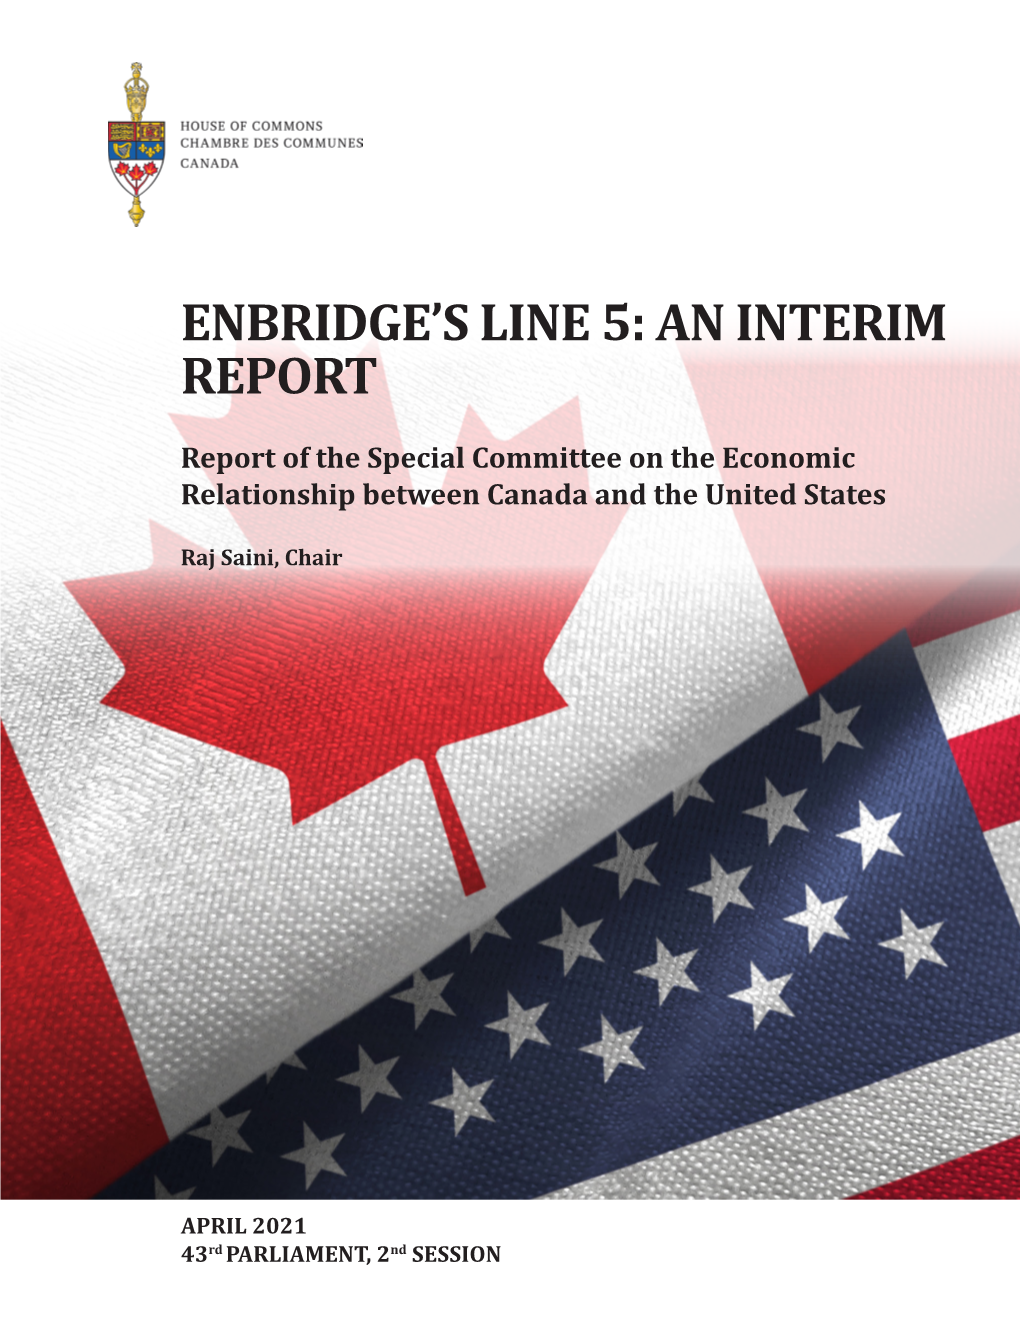 Enbridge's Line 5: an Interim Report